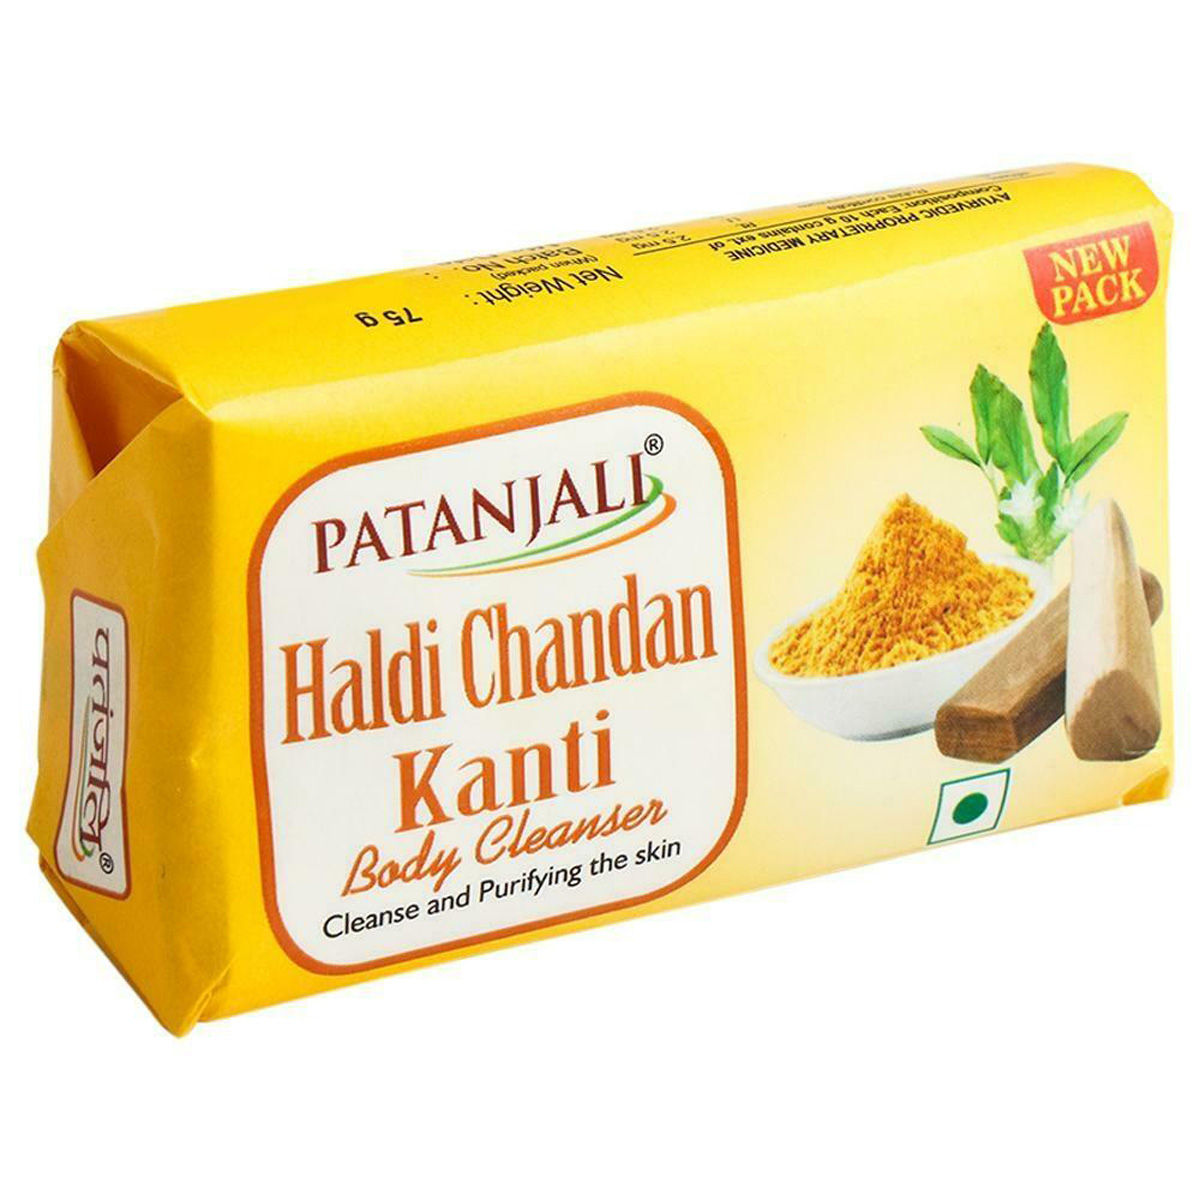 Patanjali Haldi Chandan Kanti Body Cleanser Soap, 75 gm, Pack of 1 